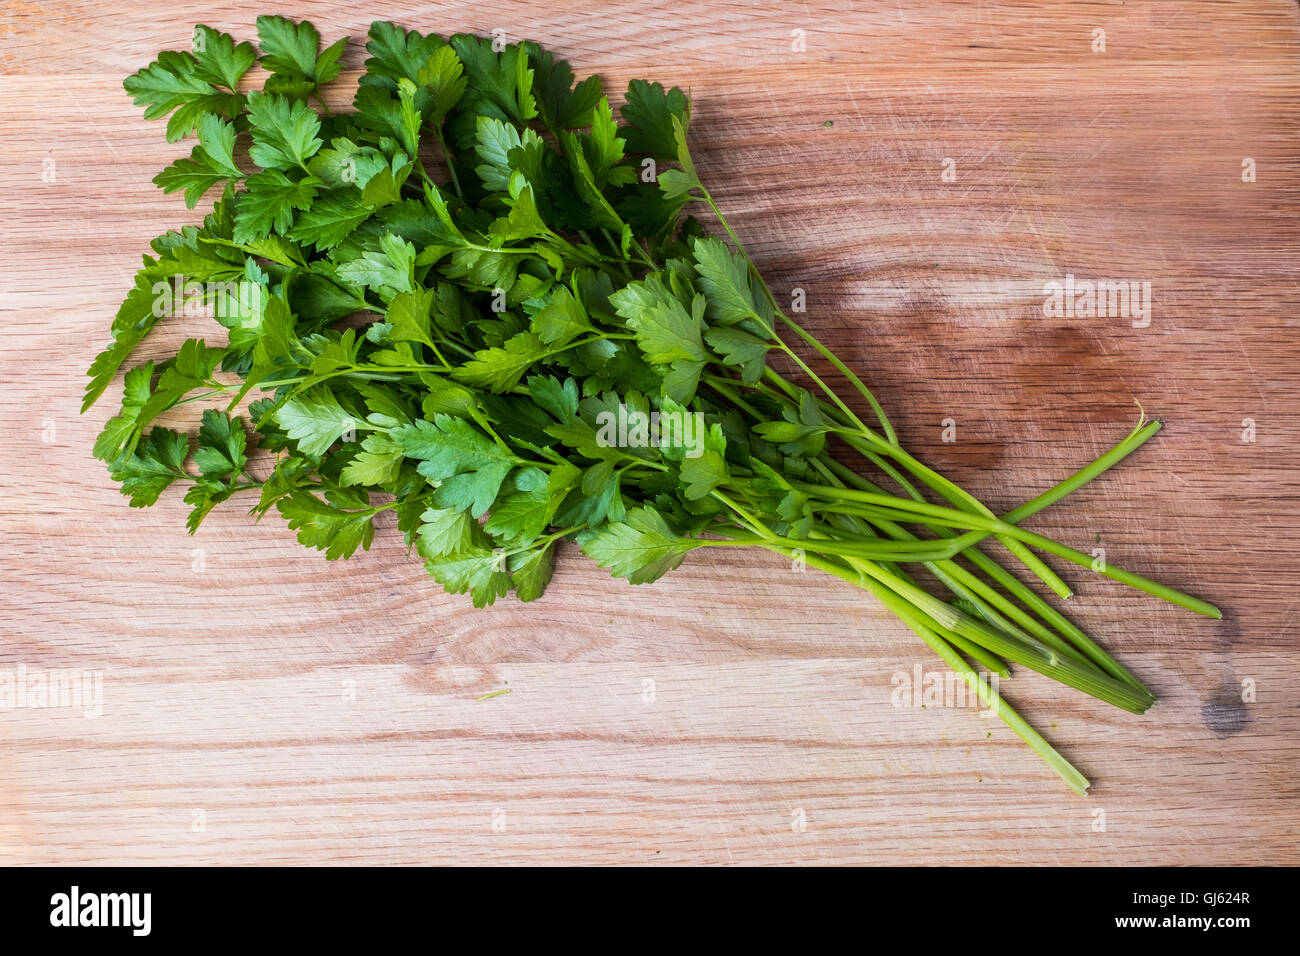 https://c8.alamy.com/comp/GJ624R/fresh-parsley-herbs-on-wooden-chopping-board-GJ624R.jpg